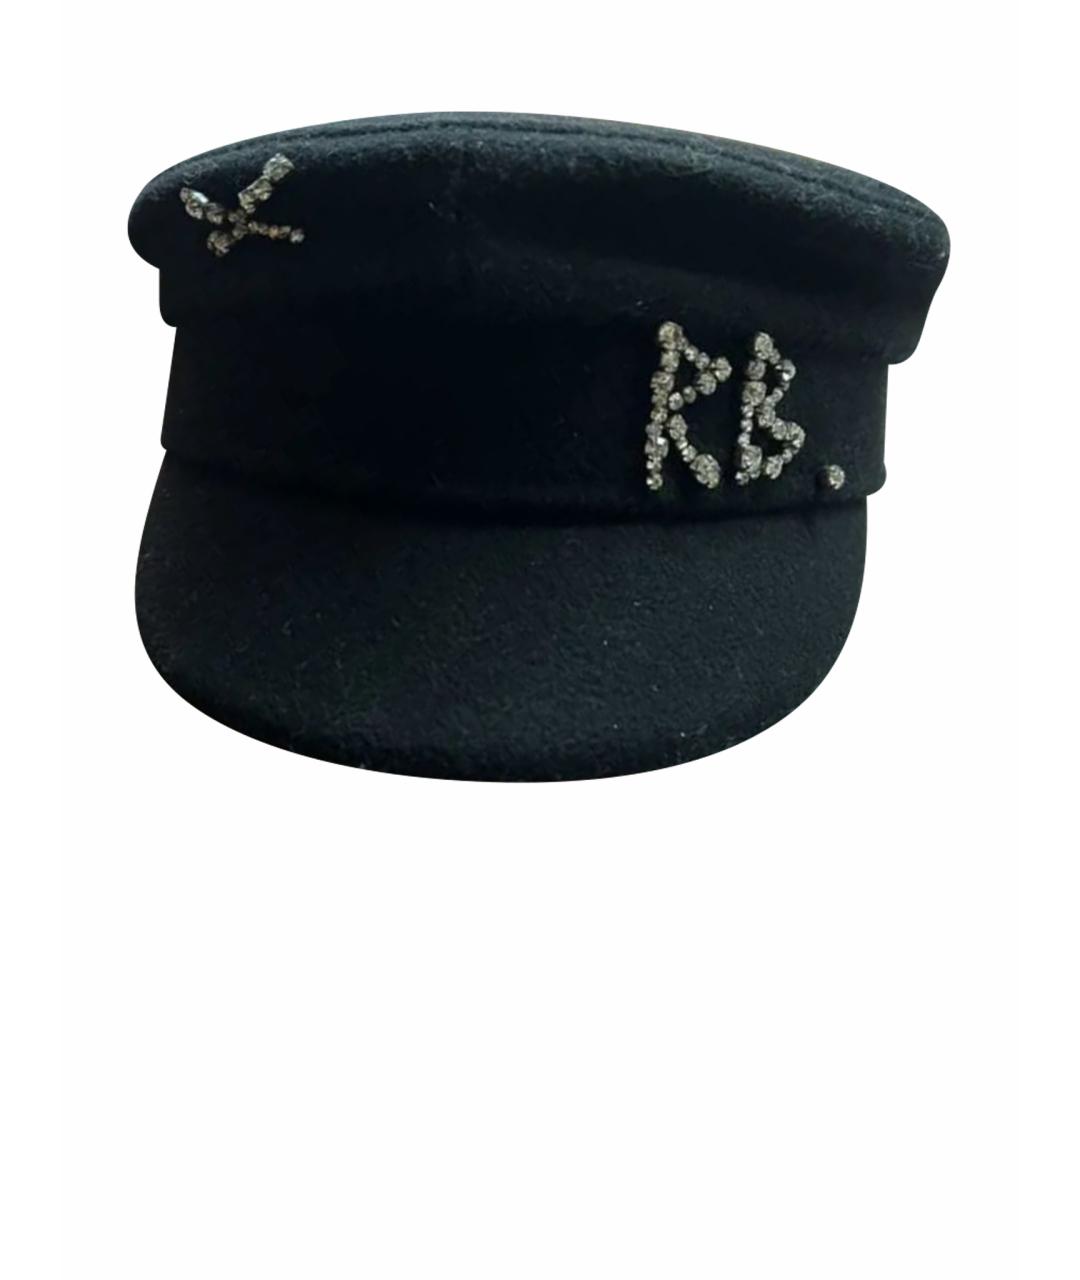 RUSLAN BAGINSKIY Черная шерстяная кепка, фото 1